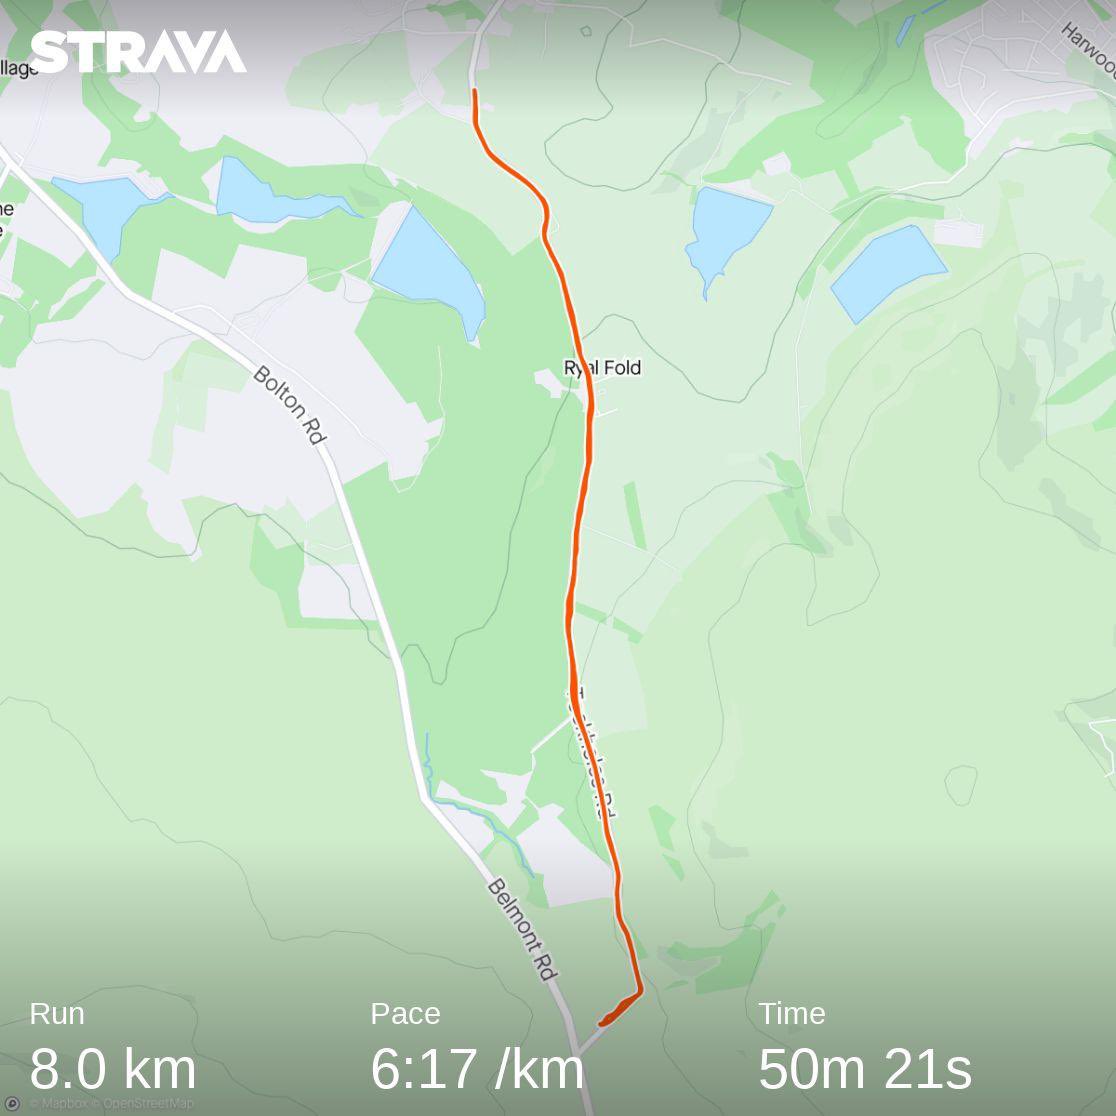 This evening’s run 🏃🏻‍♂️ 
Check out my run on Strava.
strava.app.link/LLH125u5MAb